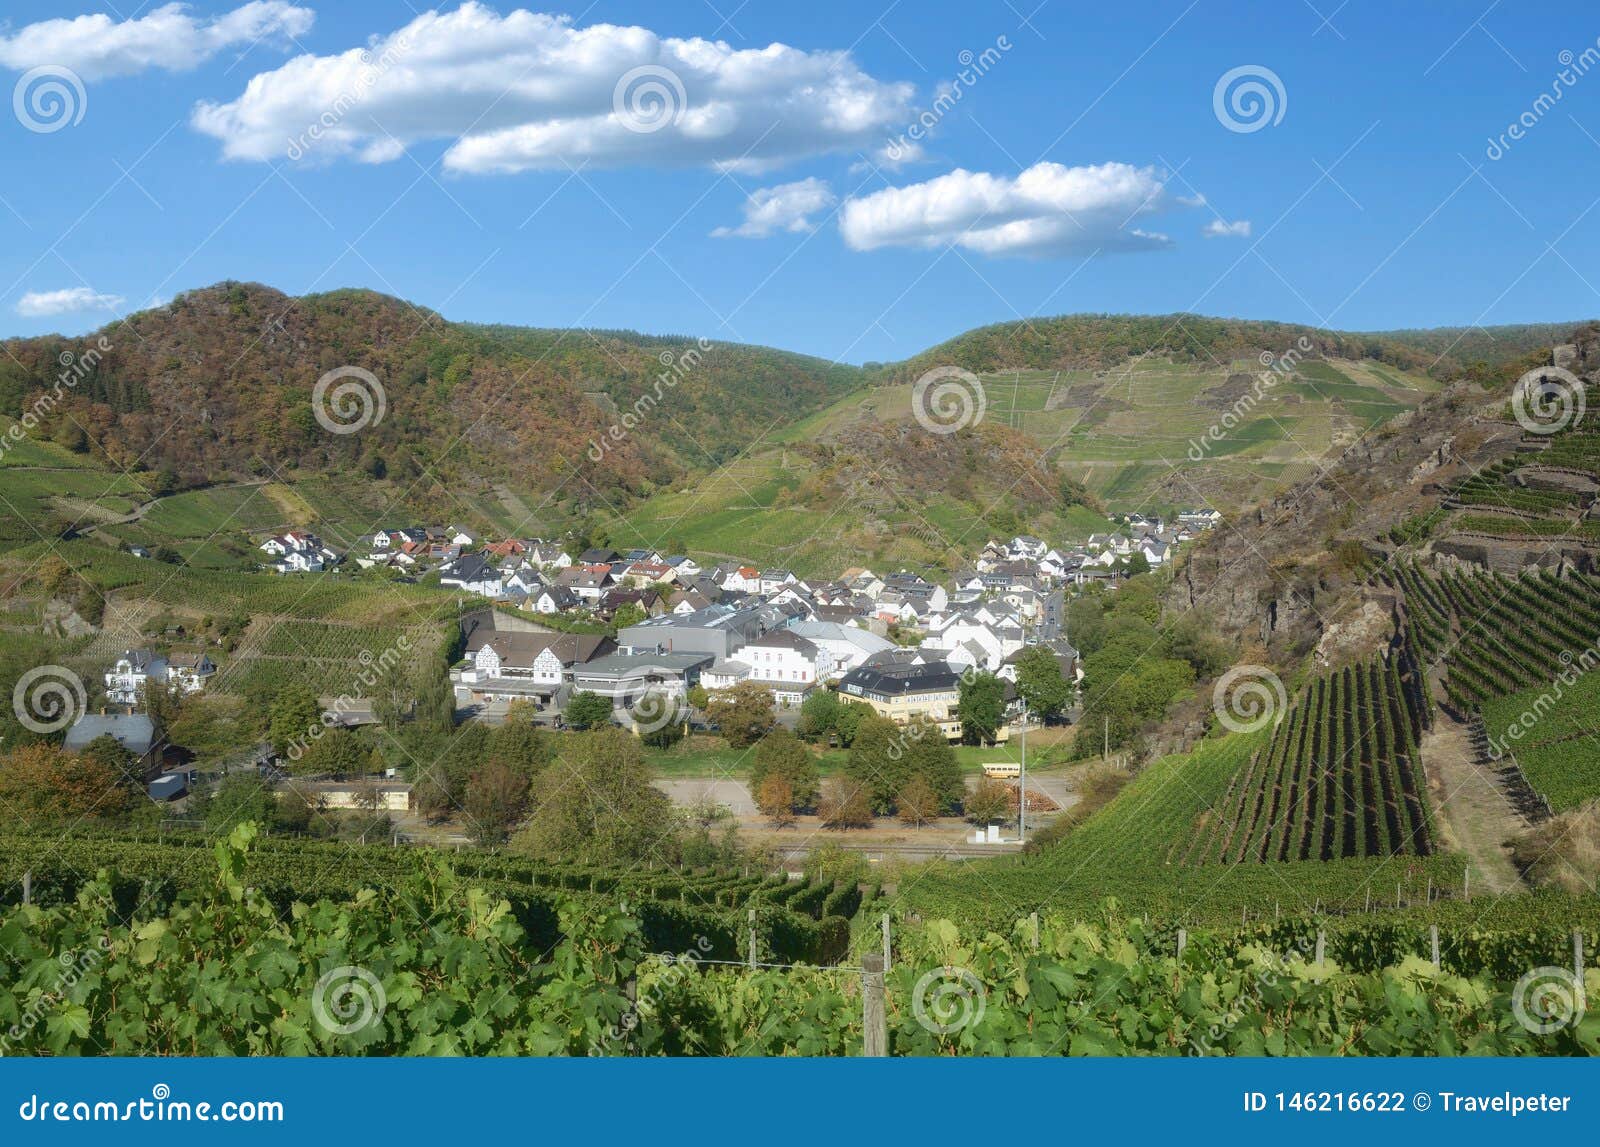 Wine Village Of Rech,Ahr,Rhineland-Palatinate,Germany 